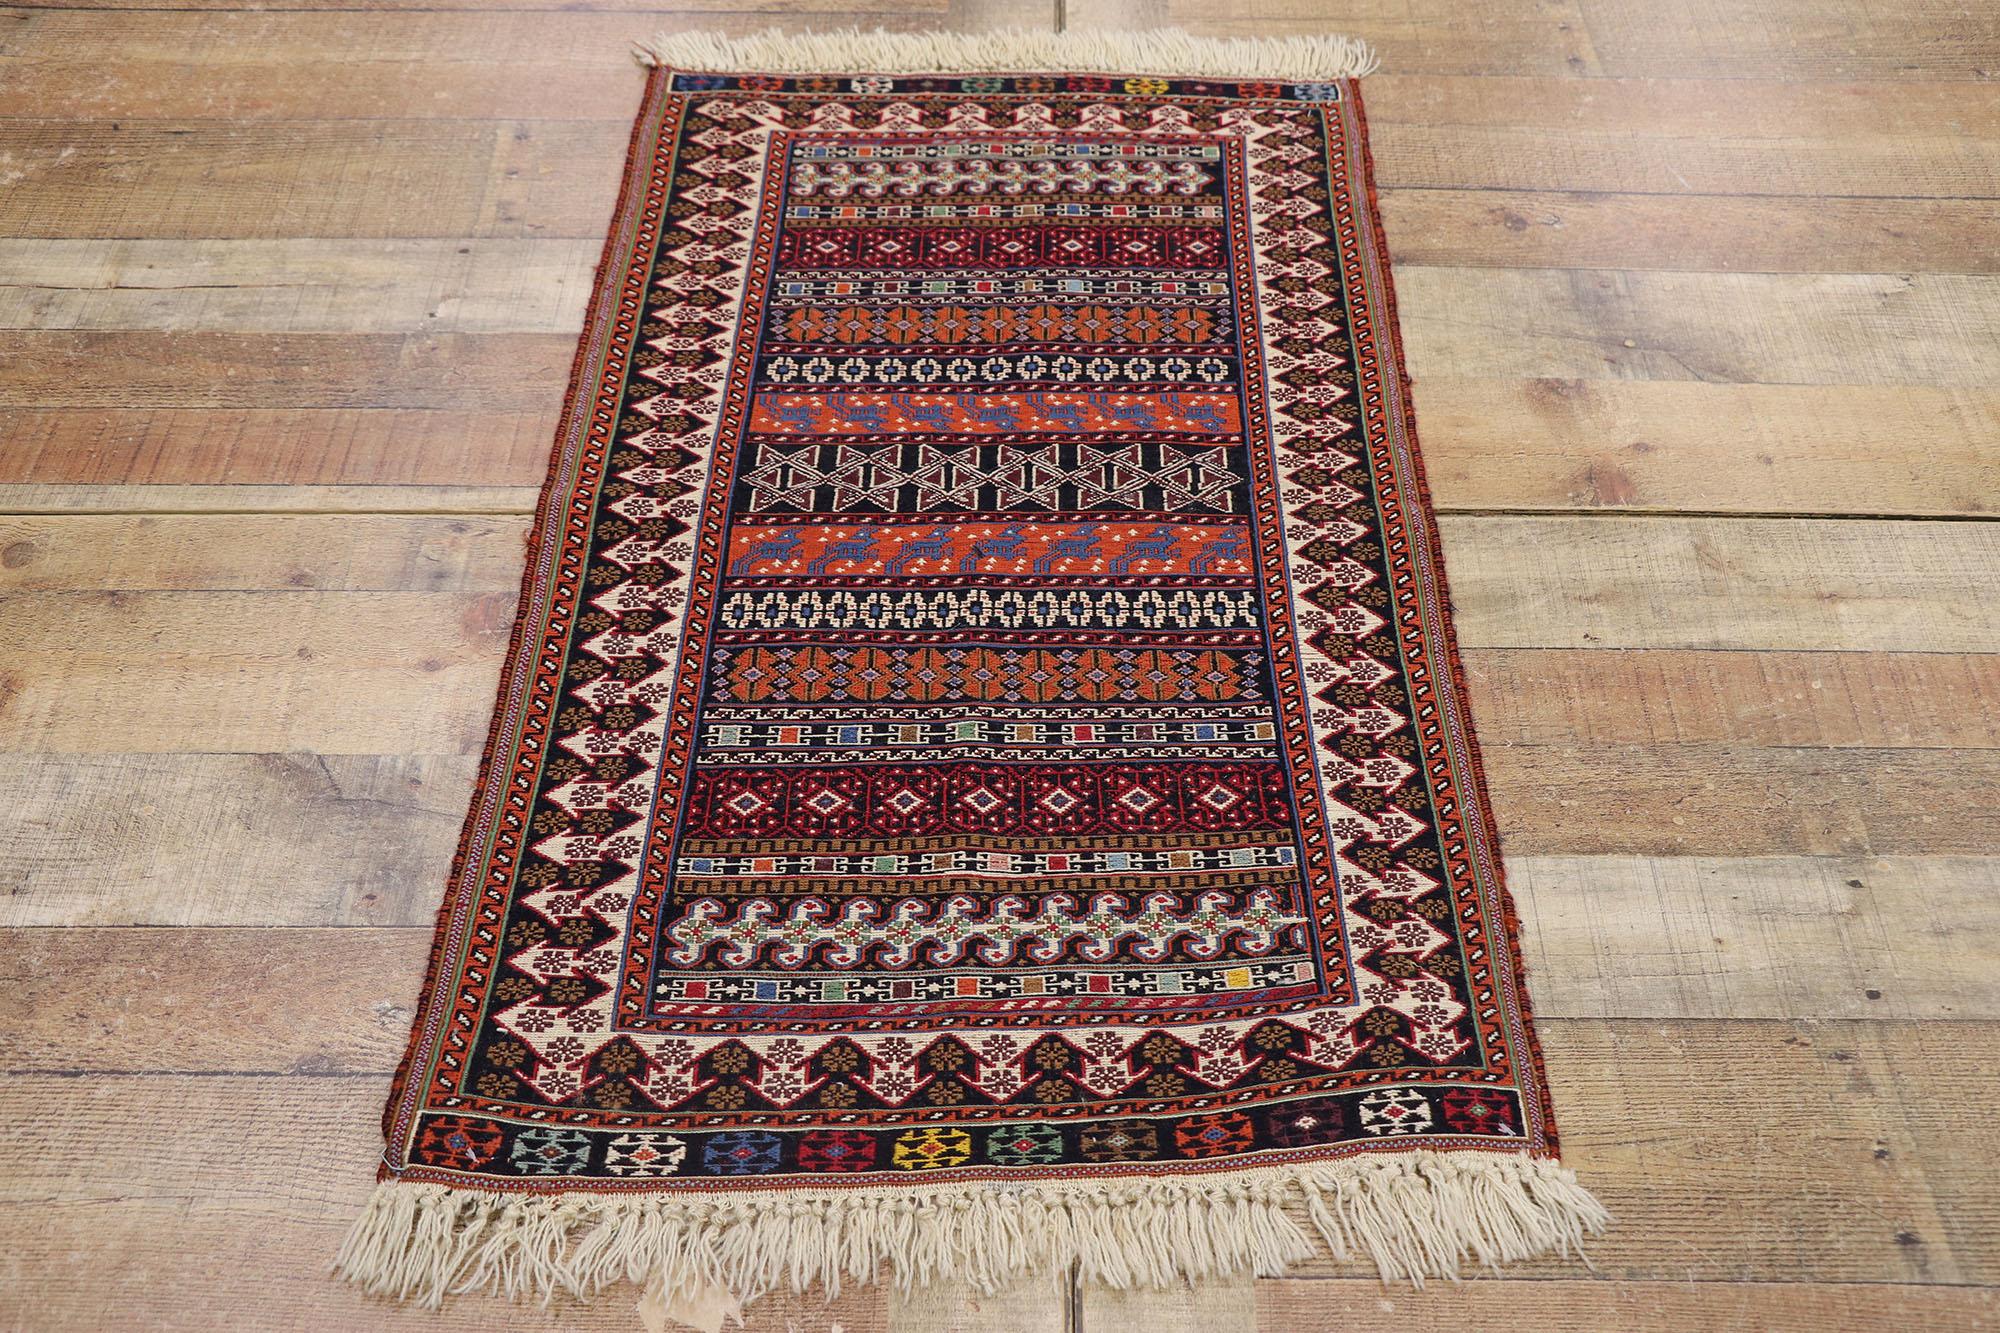 Wool Vintage Turkish Kilim Rug, Small Flat-Weave Rug with Boho Chic Tribal Style